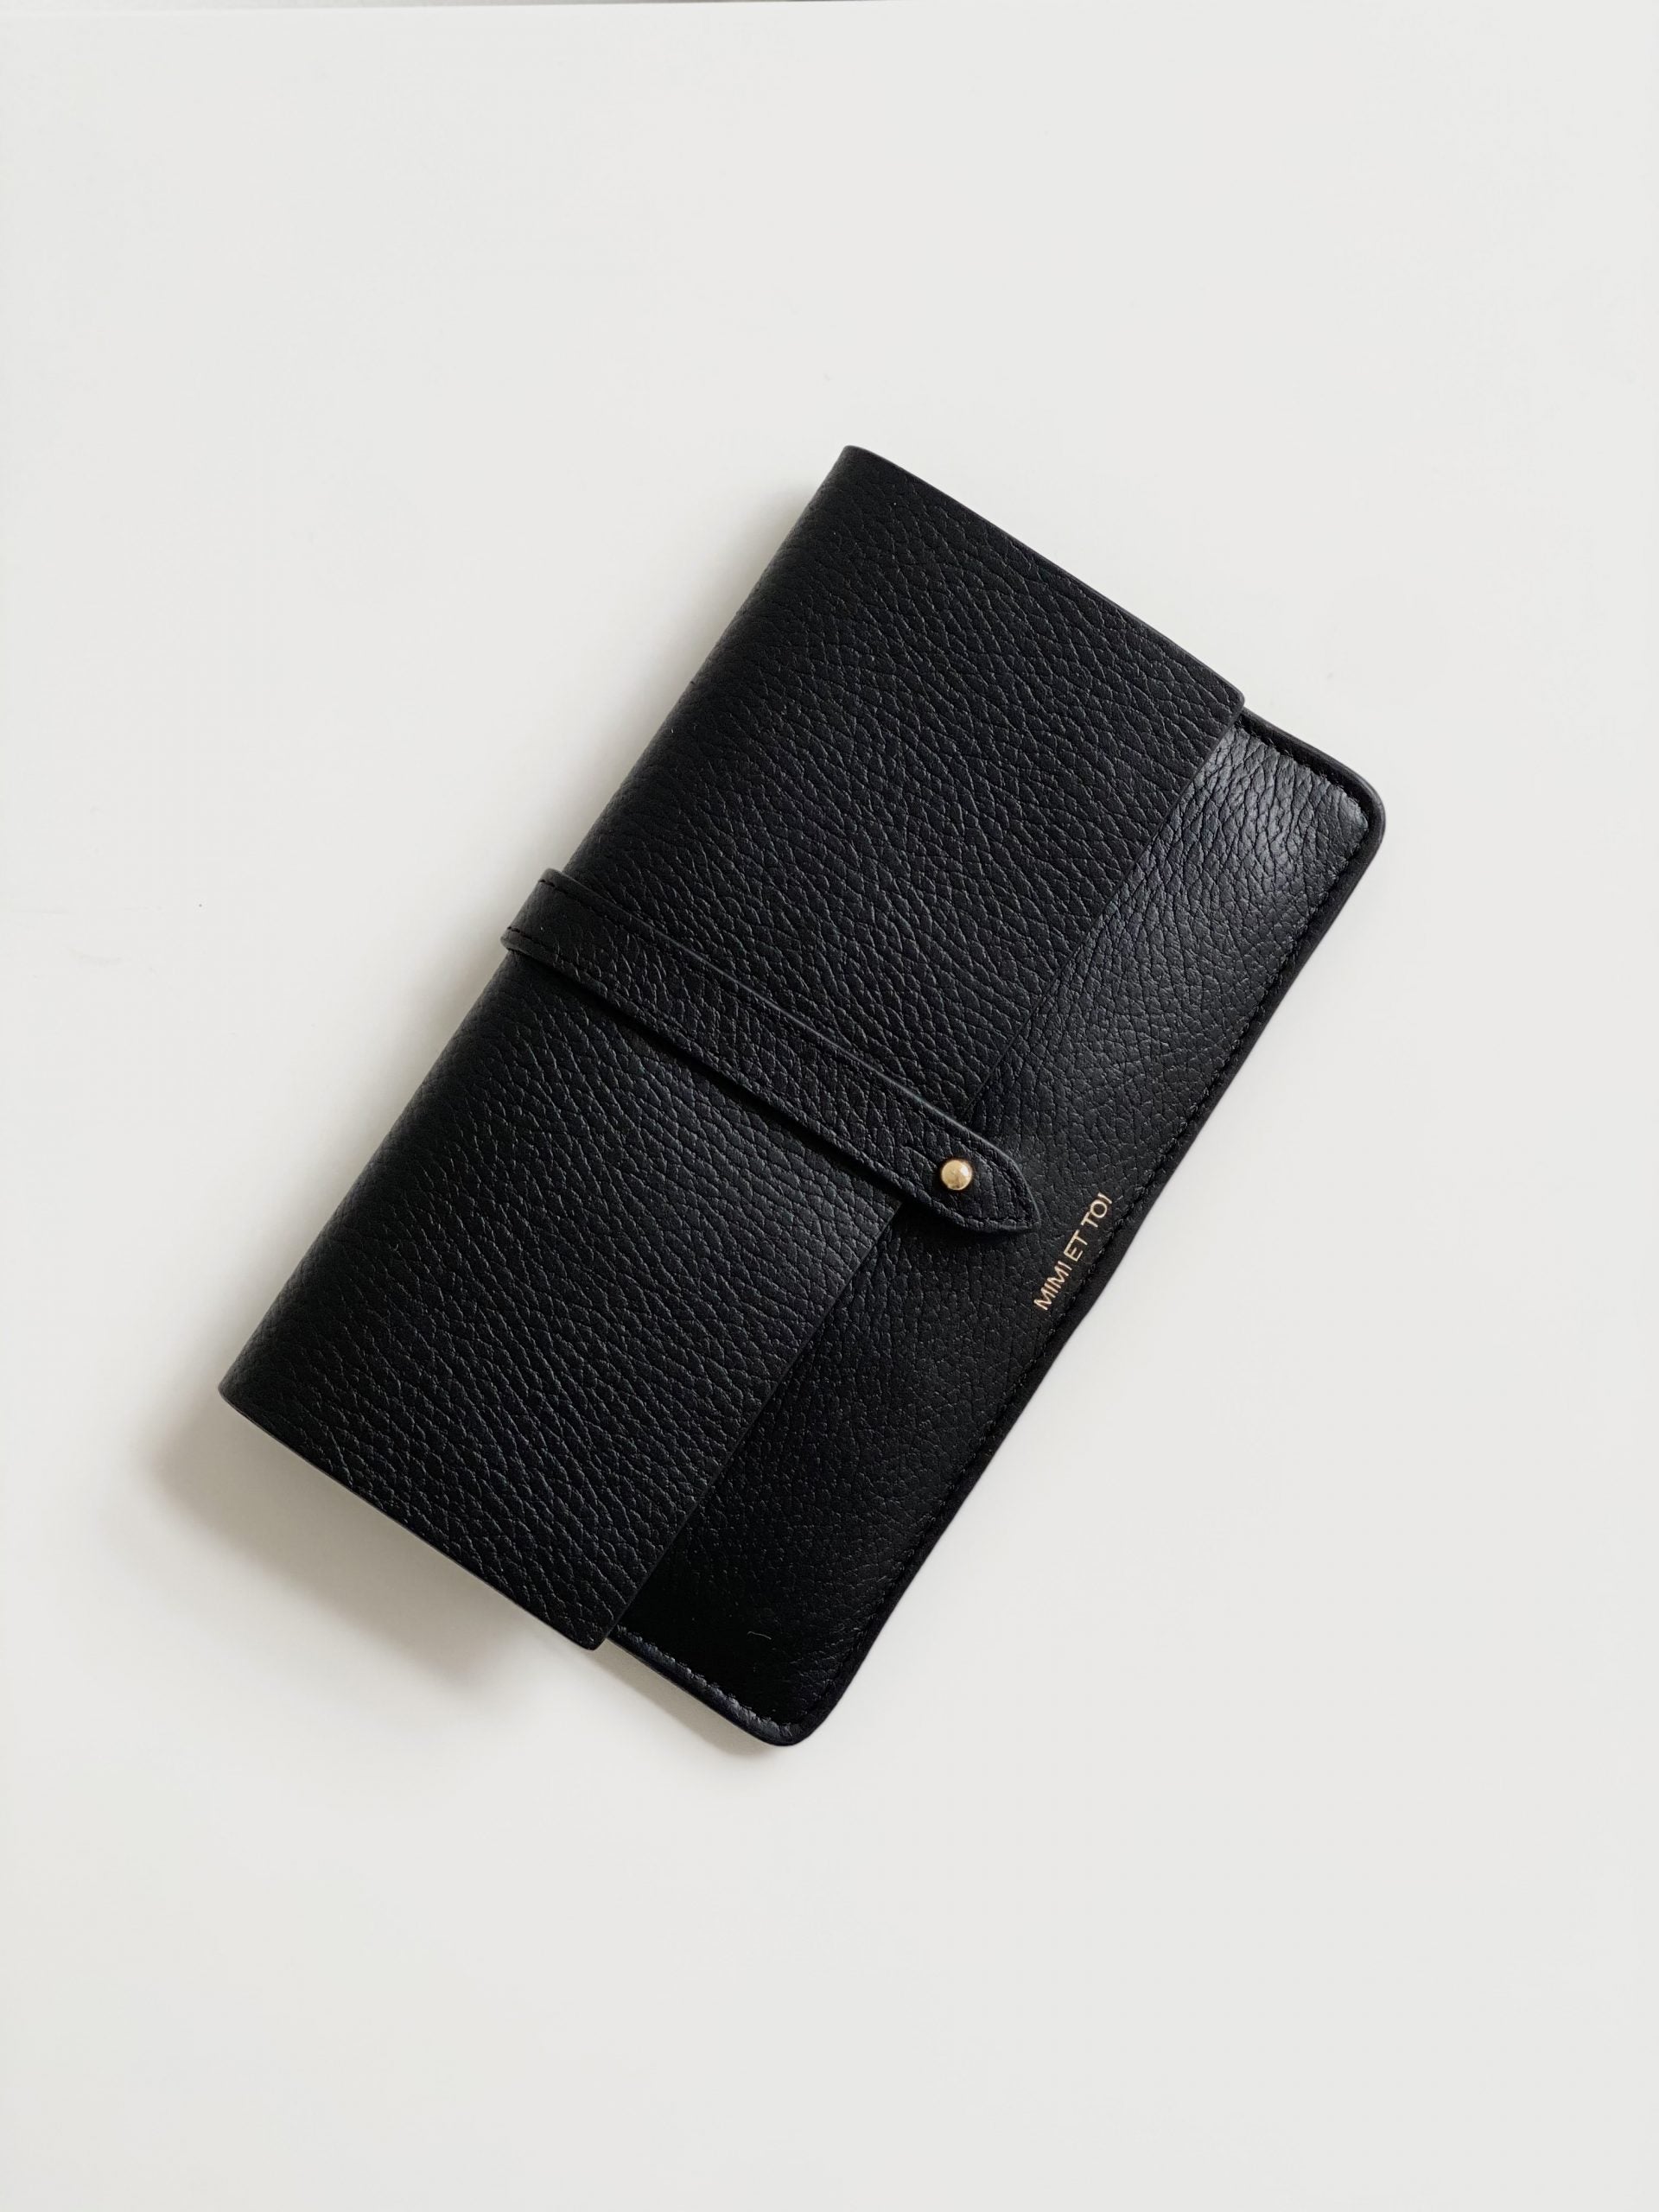 Spencer Full Leather Wallet Black